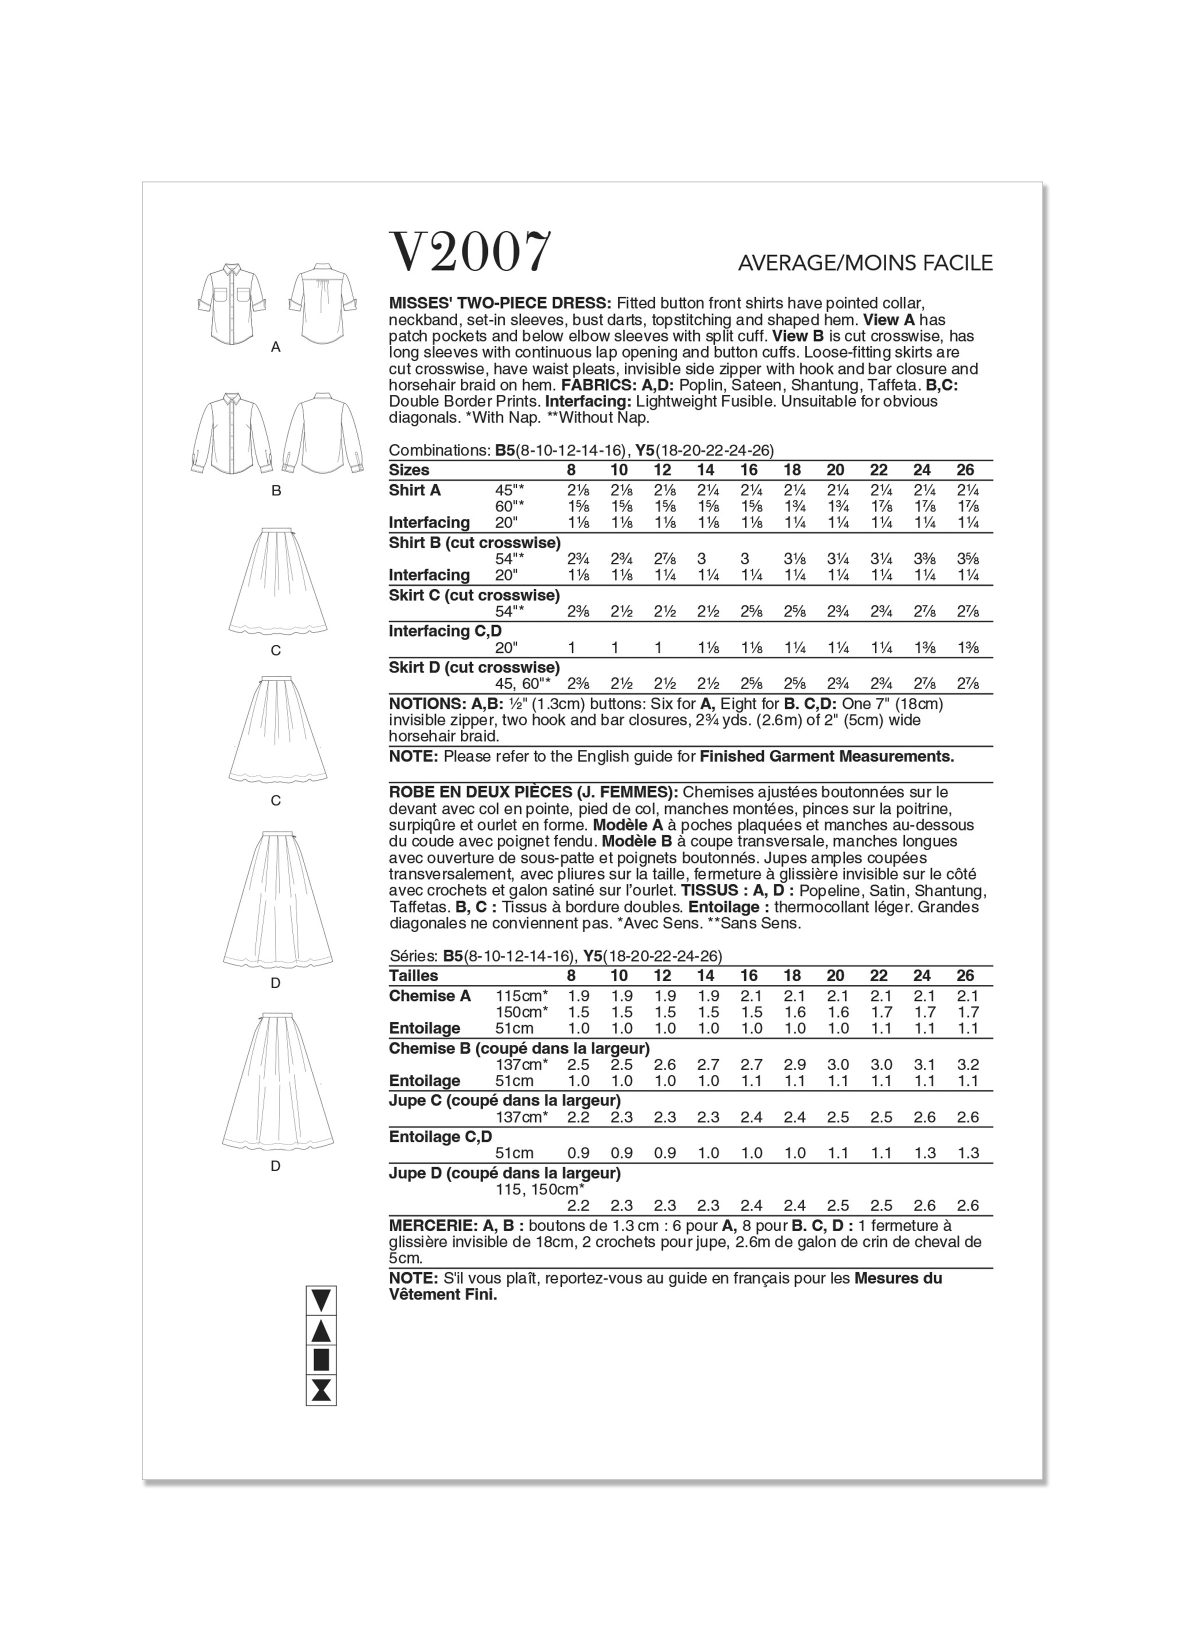 Vogue Patterns V2007 Misses’ Two Piece Dress - Sewdirect